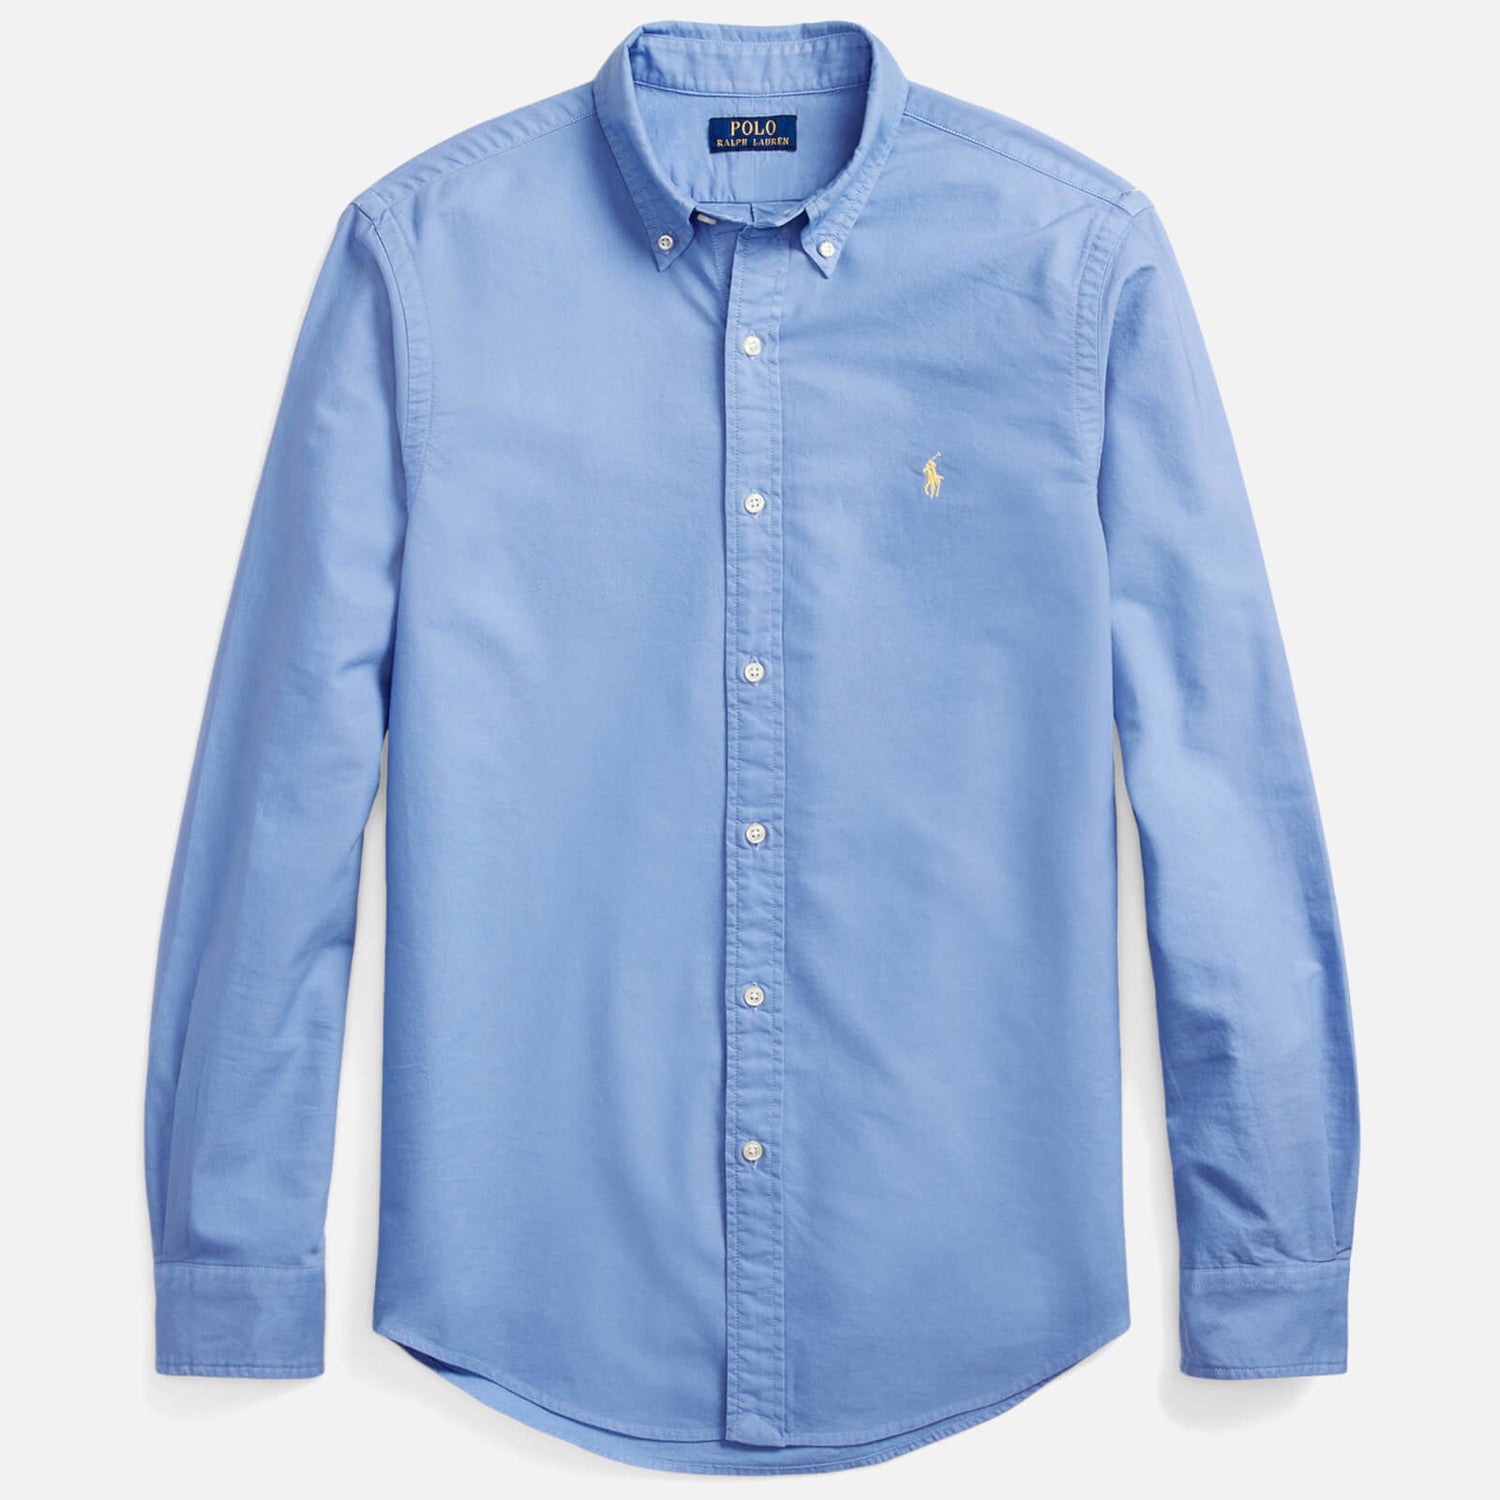 Polo Ralph Lauren Men's Slim Fit Oxford Shirt - Harbor Island Blue